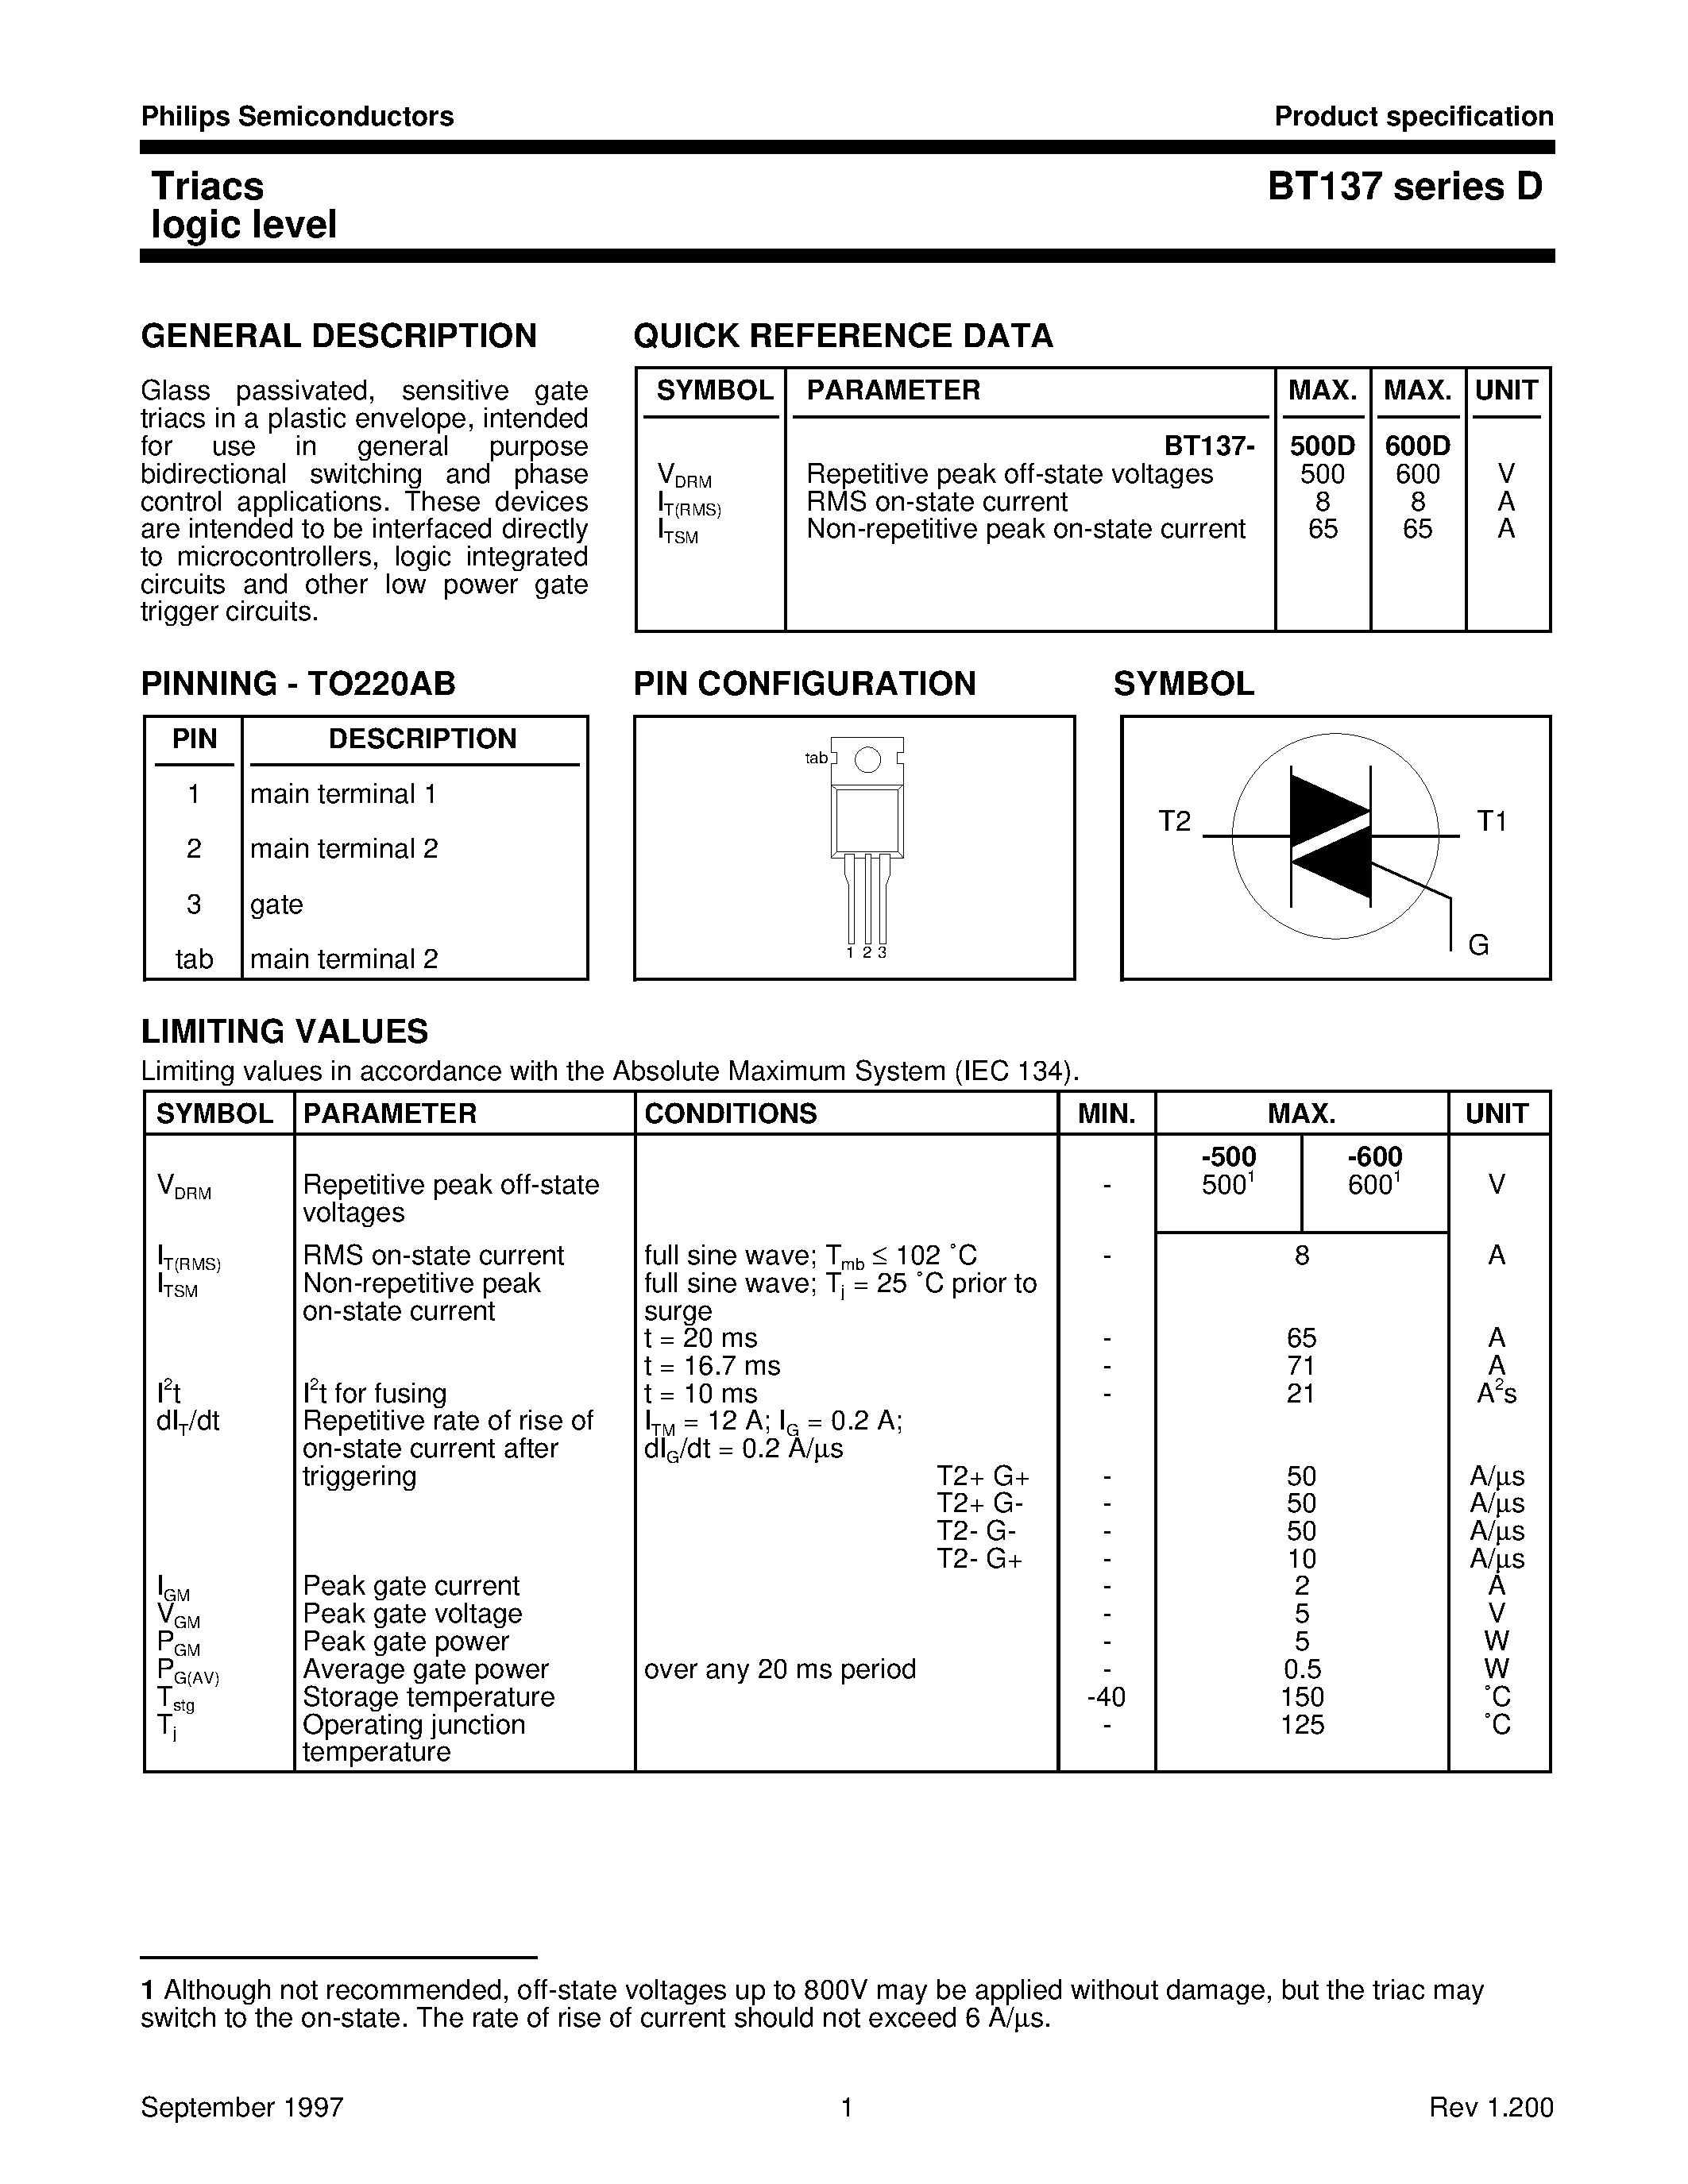 Datasheet BT137-600D - Triacs logic level page 1